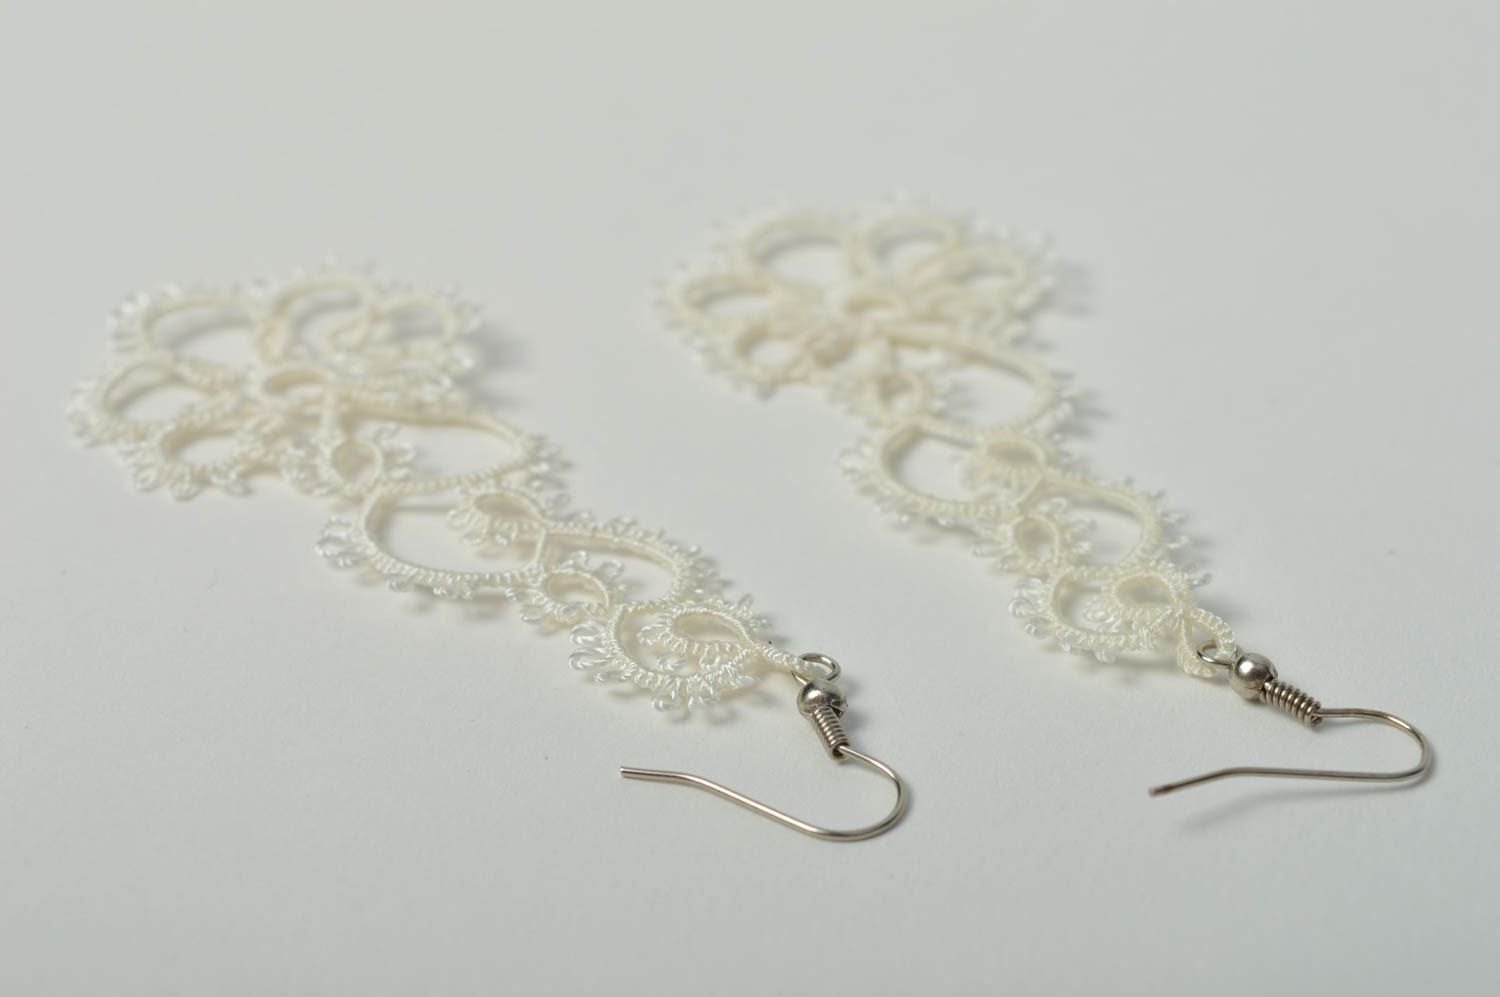 Handmade woven lace earrings textile earrings bridal jewelry designs gift ideas photo 4